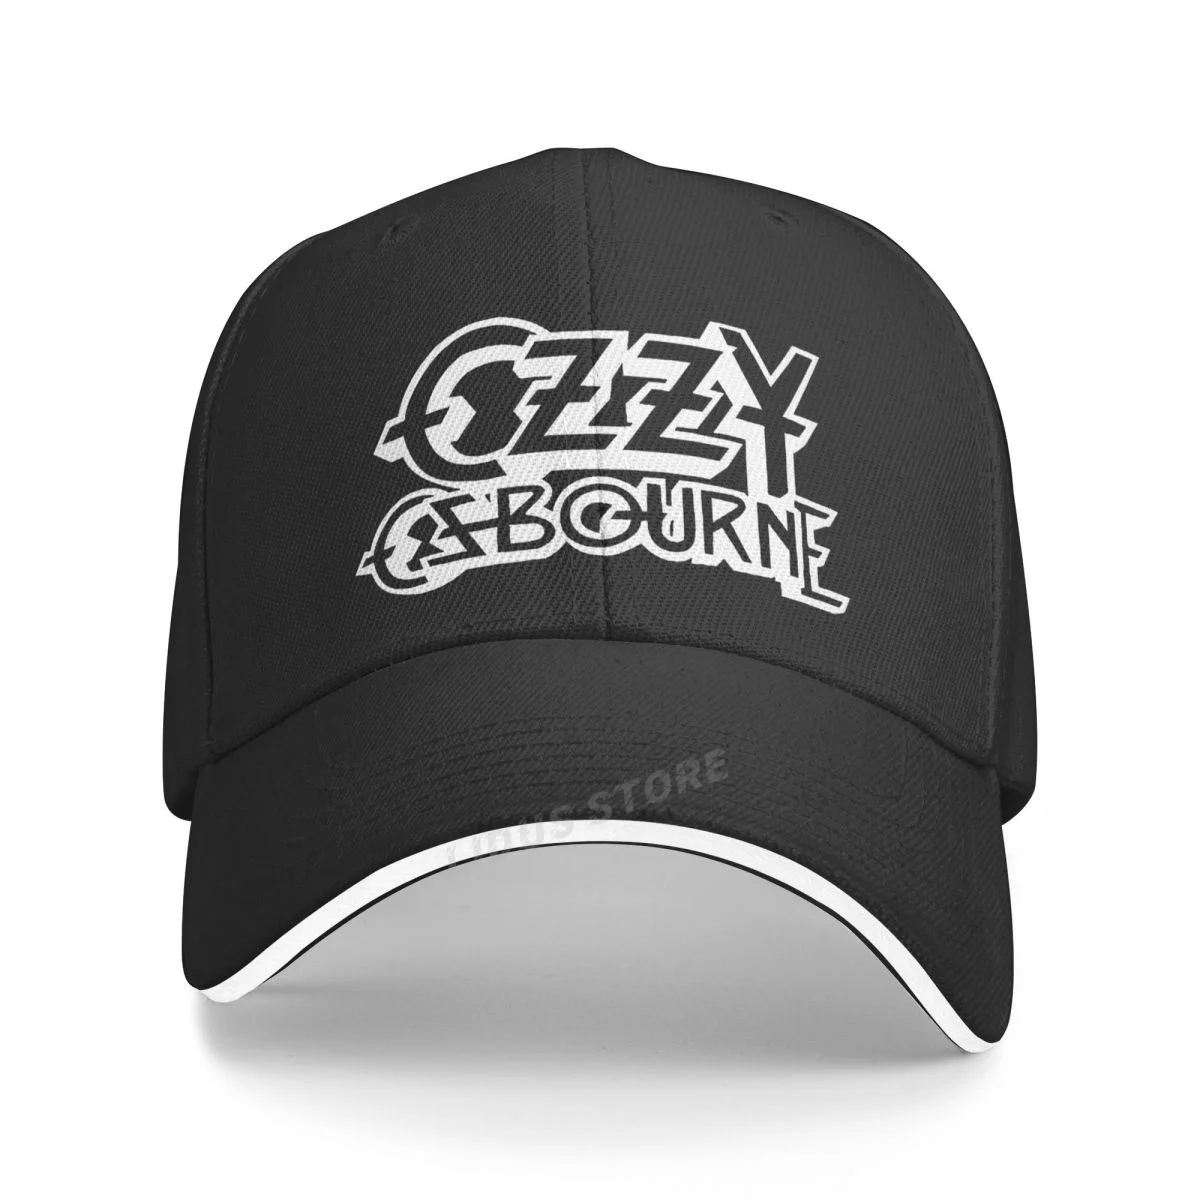 New Ozzy Osbourne Baseball Cap Fashion Cool Unisex Ozzy Punk Rock Band Hat Men Caps